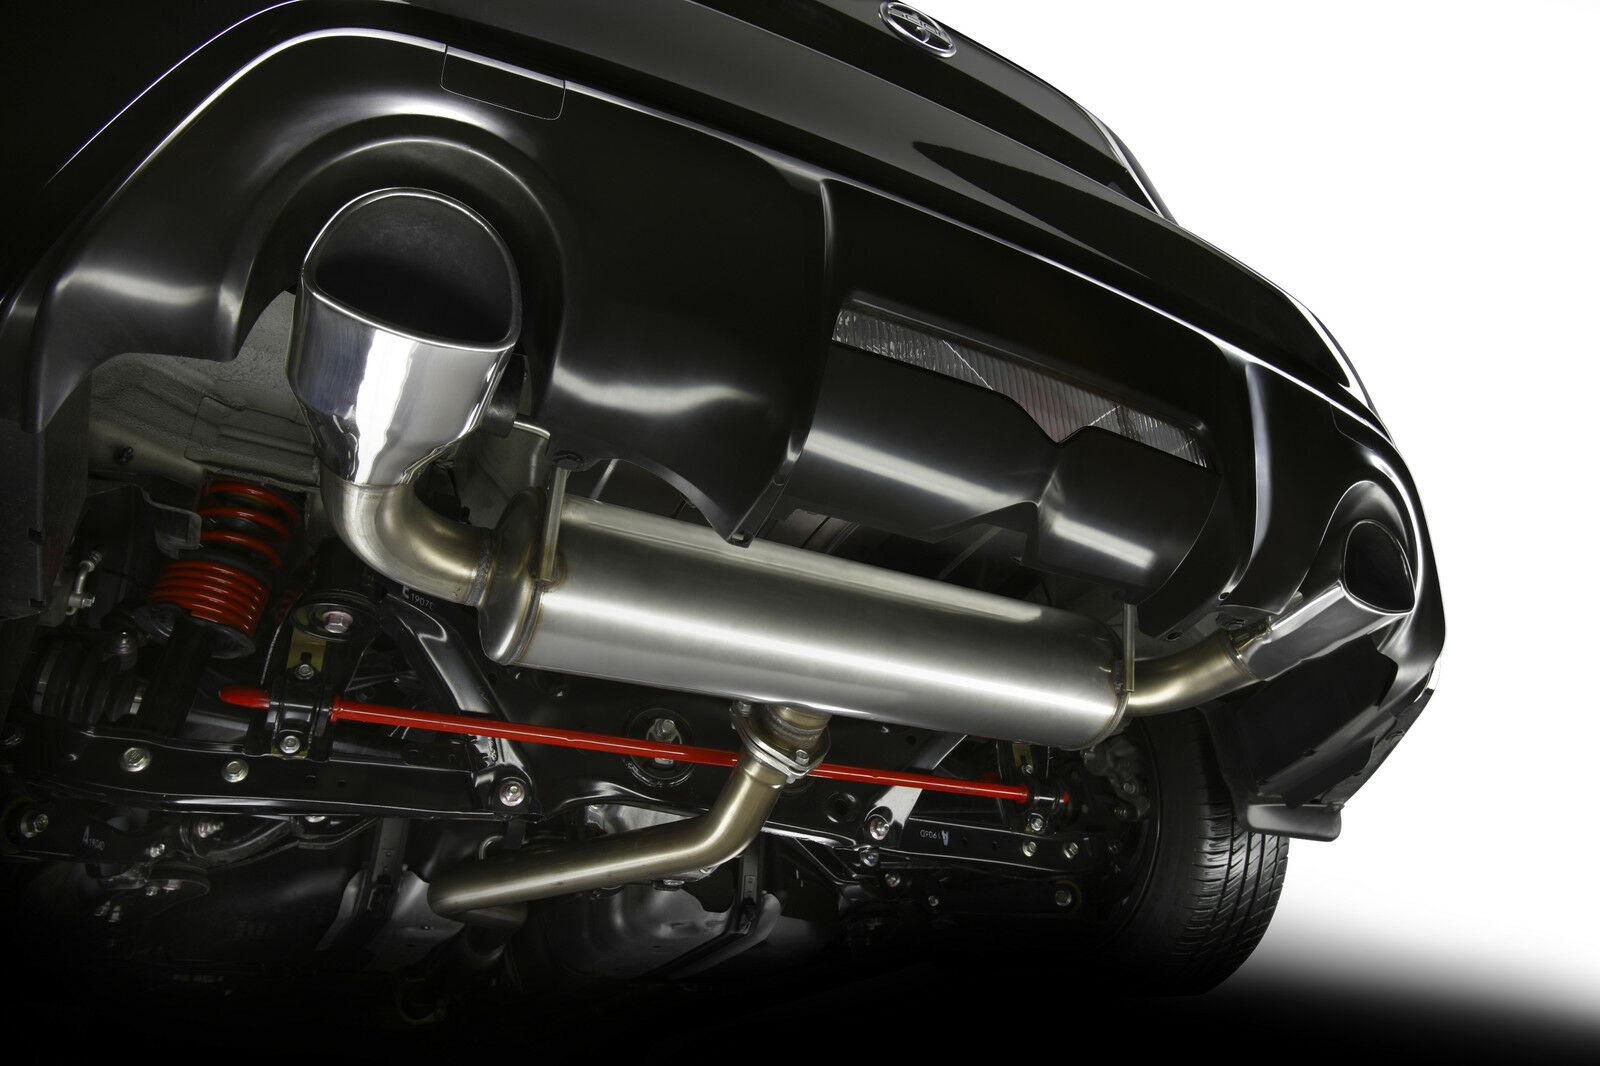 Tuning systems. Exhaust System 84500. Двойной выхлоп на Прадо 150. Выхлоп TRD. Toyota FJ Cruiser 2007 - 2014 TRD Cat back Exhaust Kit - OEM New.